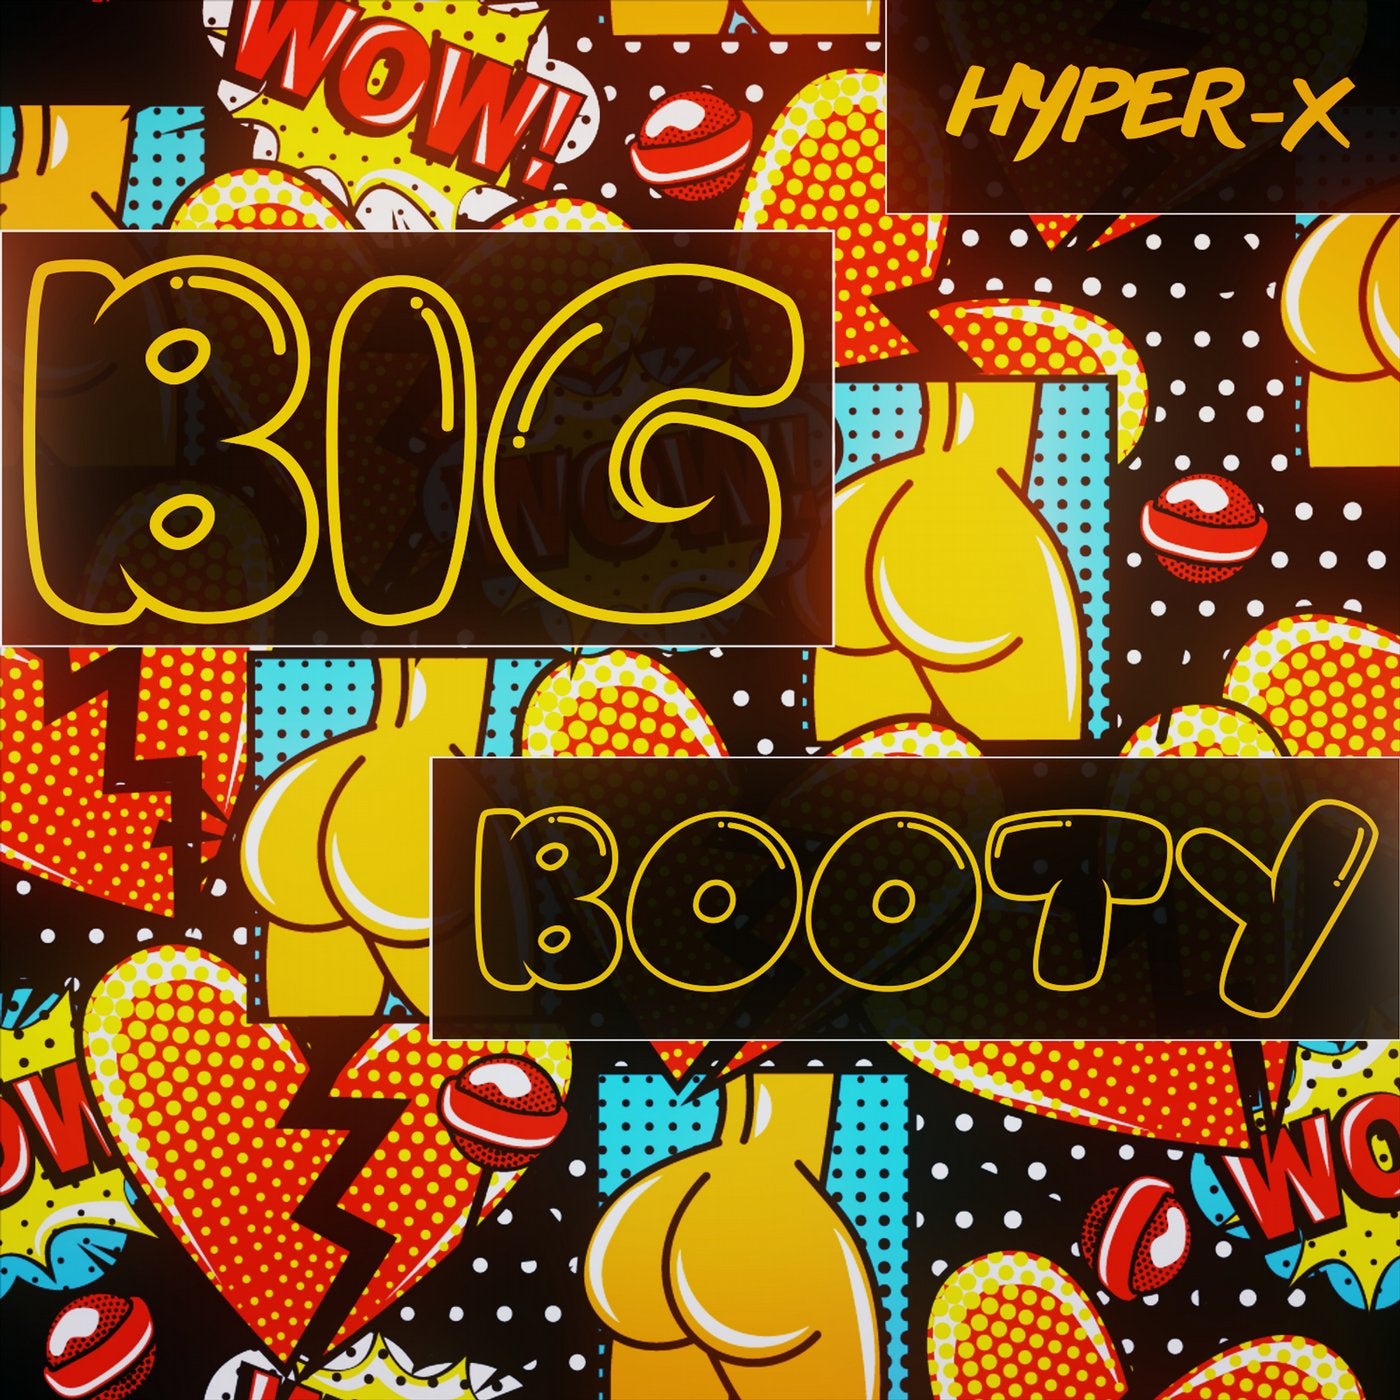 Big Booty (Original Mix) by Hyper-X on Beatport